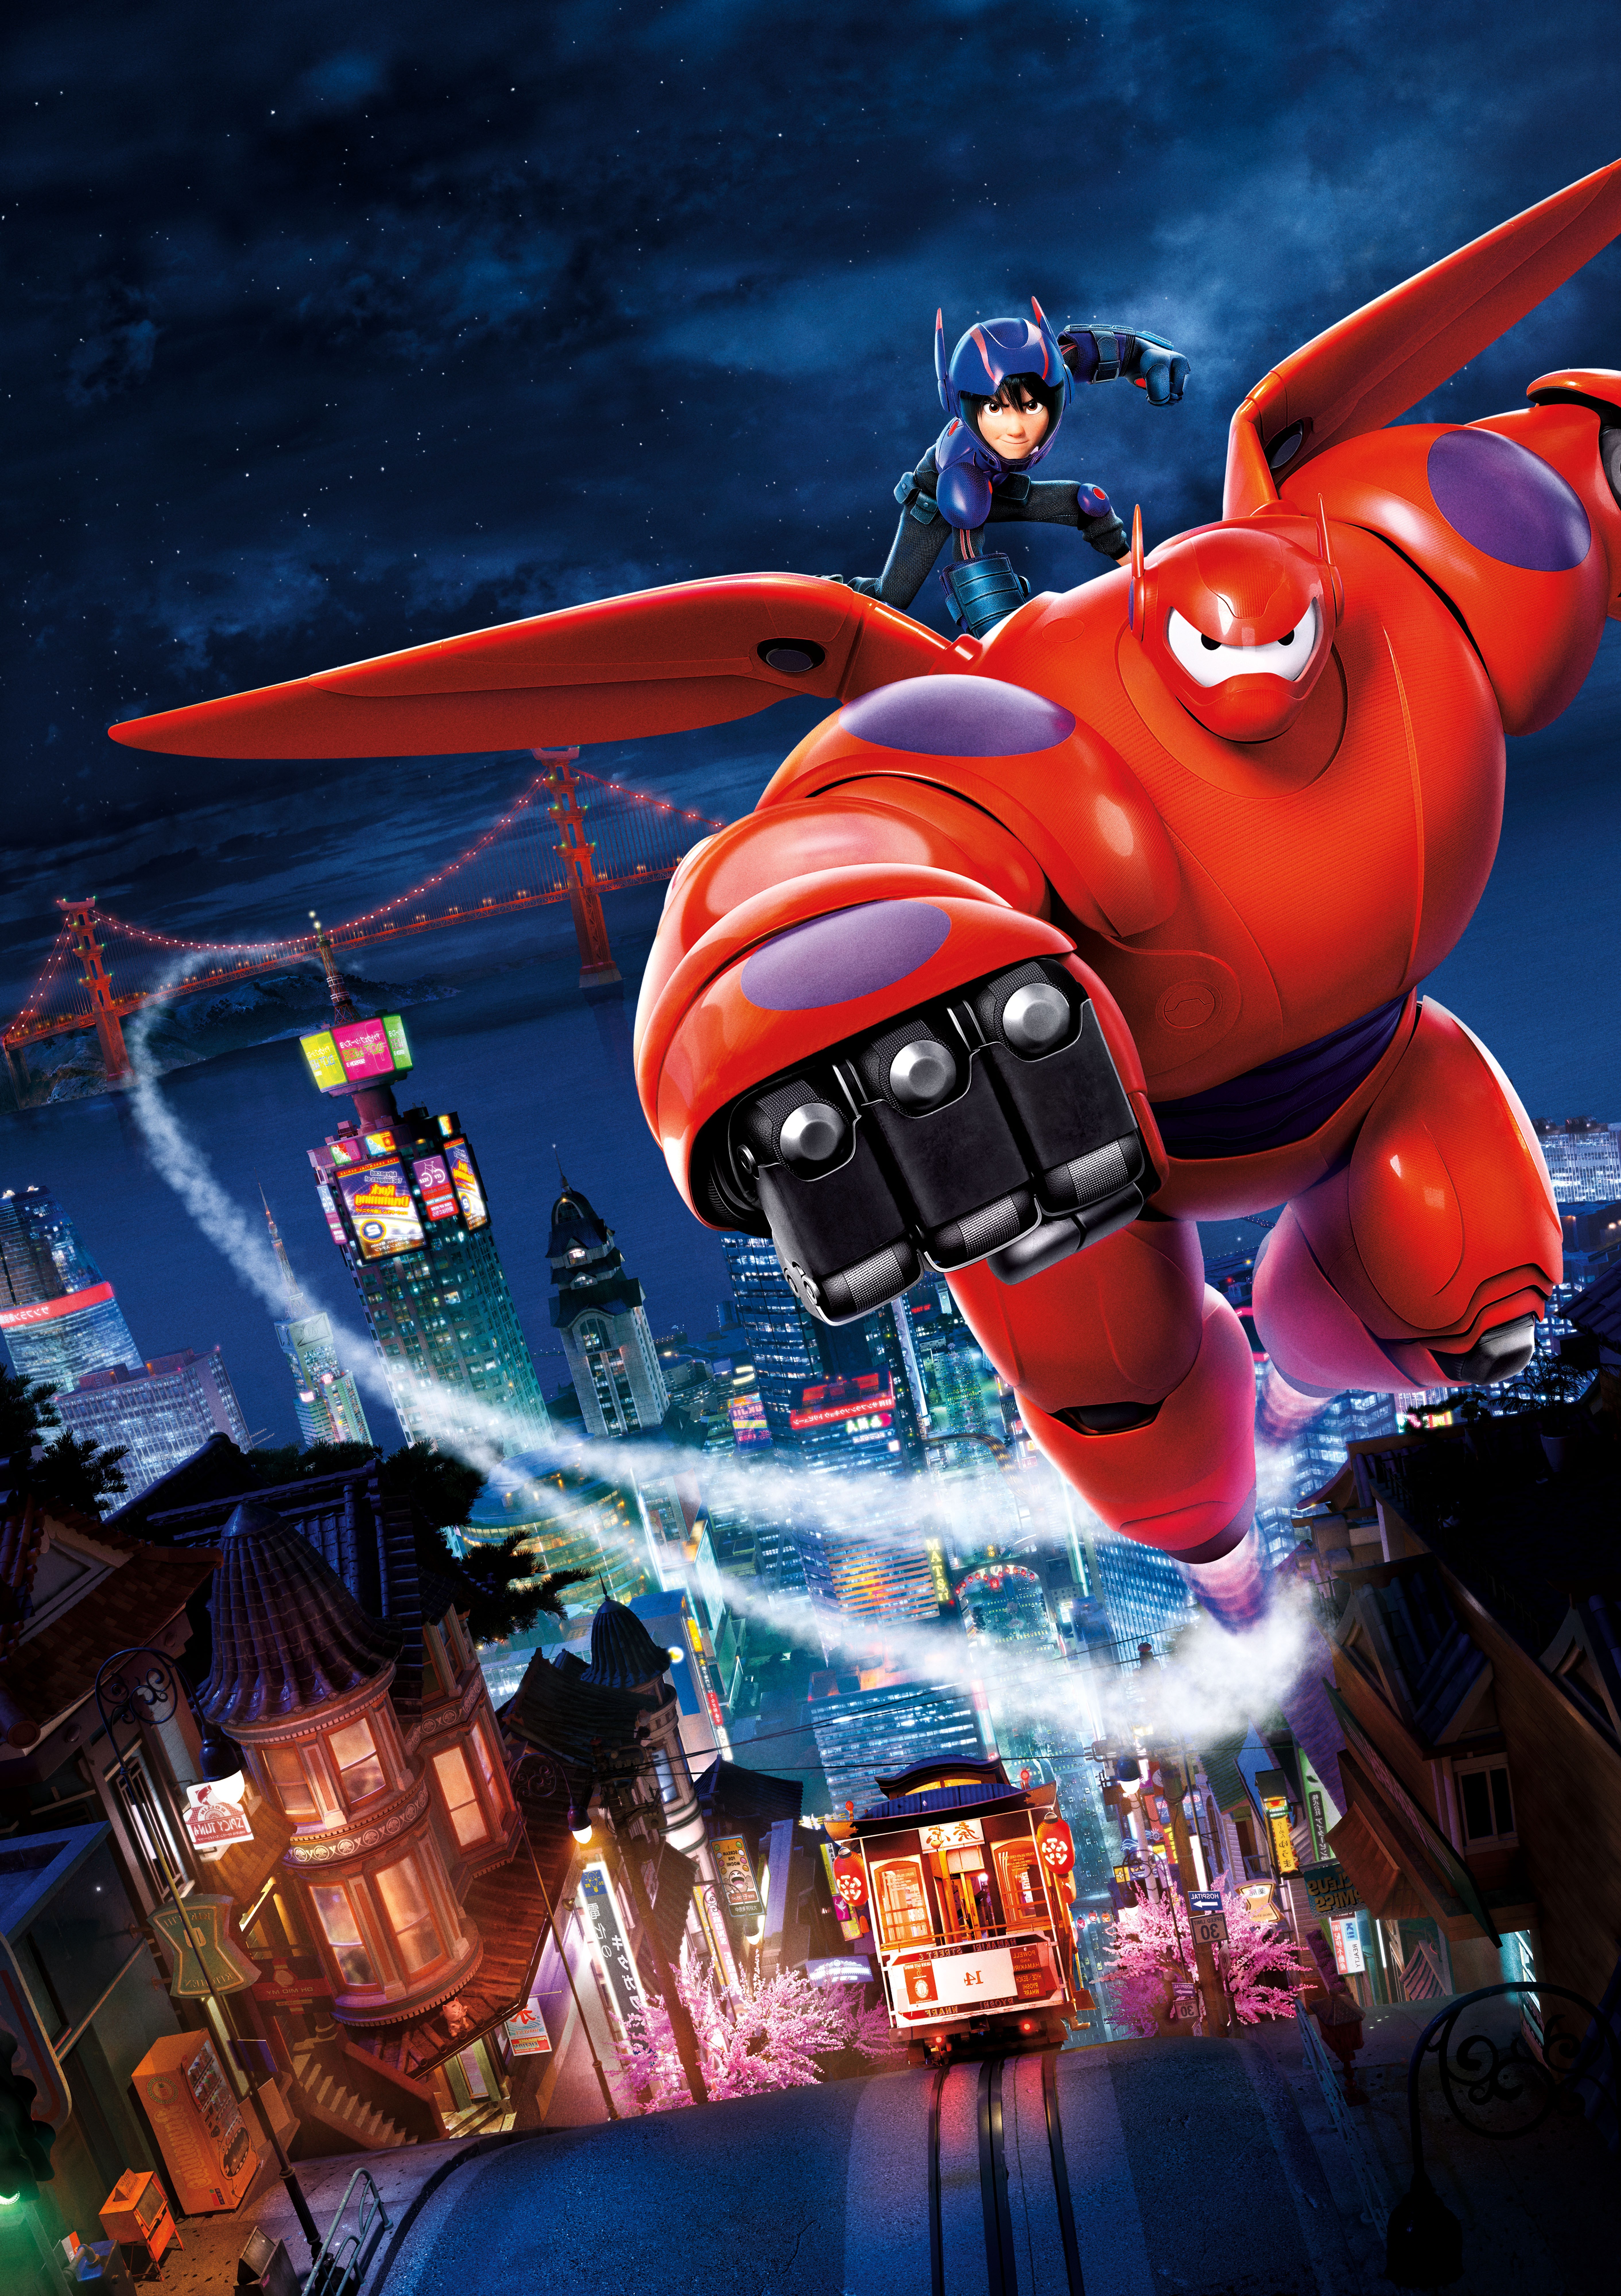 Disney, Pixar Animation Studios, Baymax (Big Hero 6), Movies Wallpaper